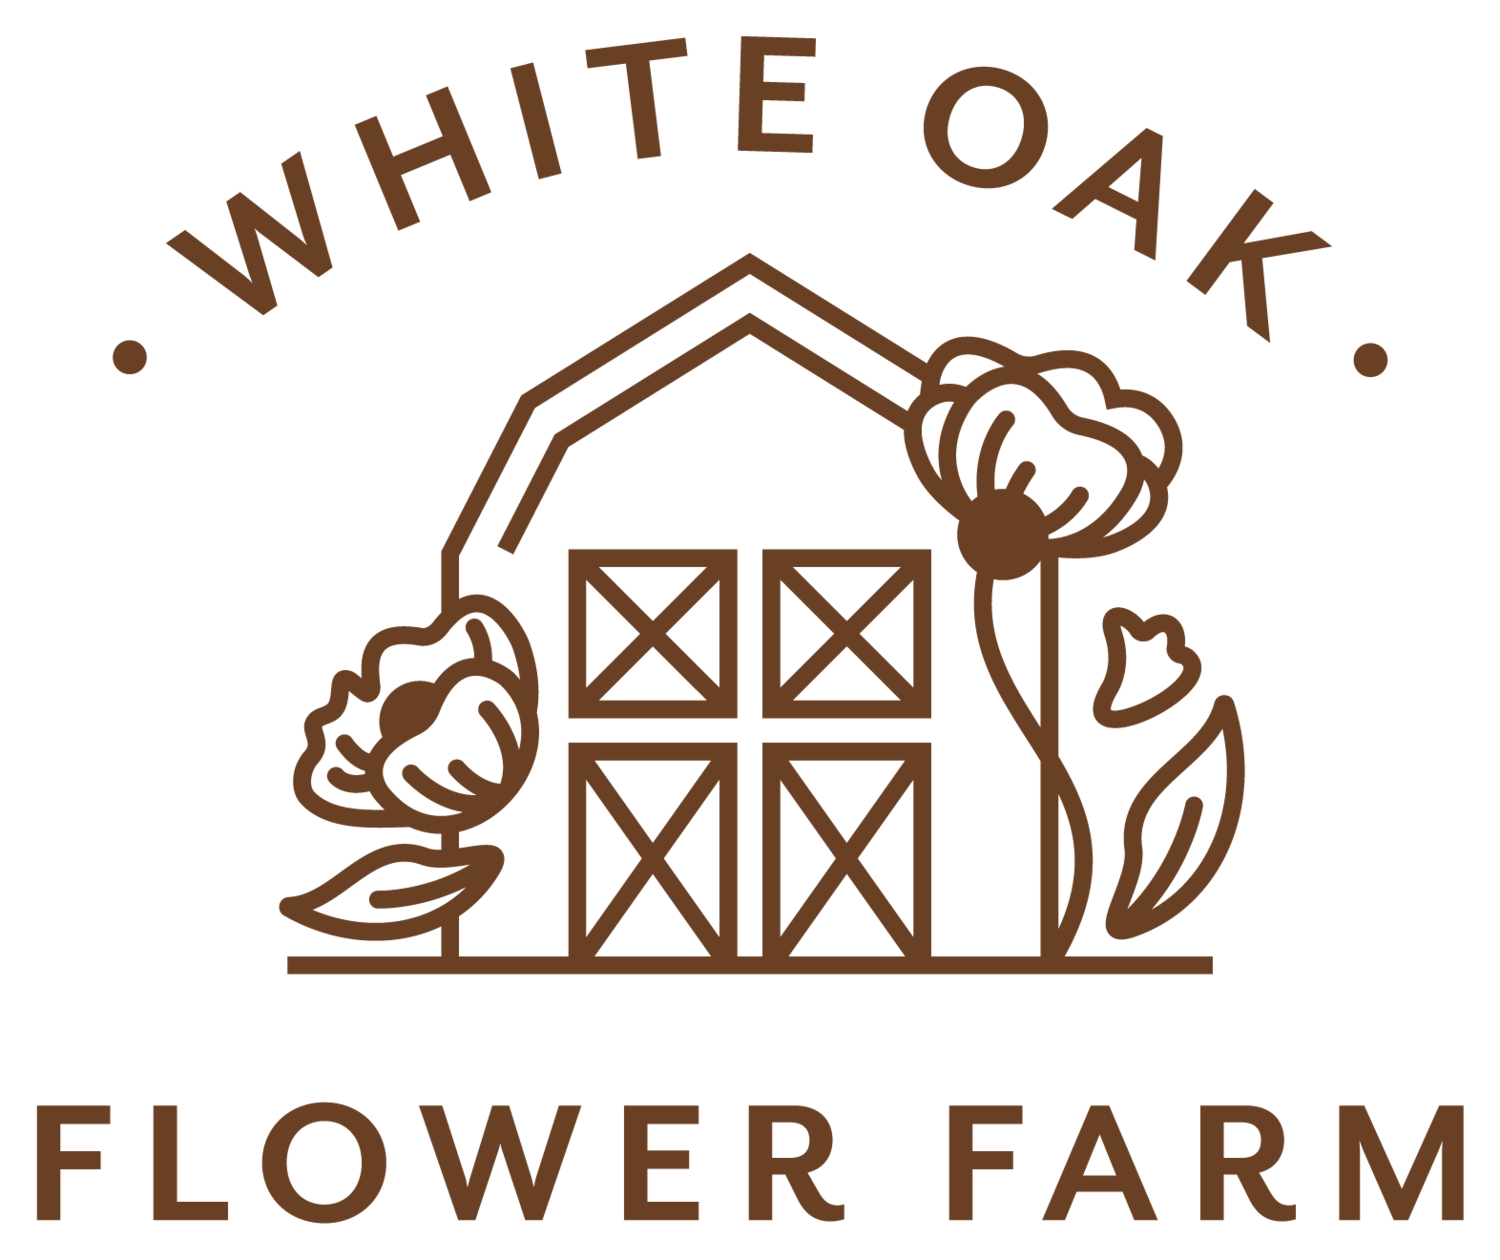 White Oak Flower Farm